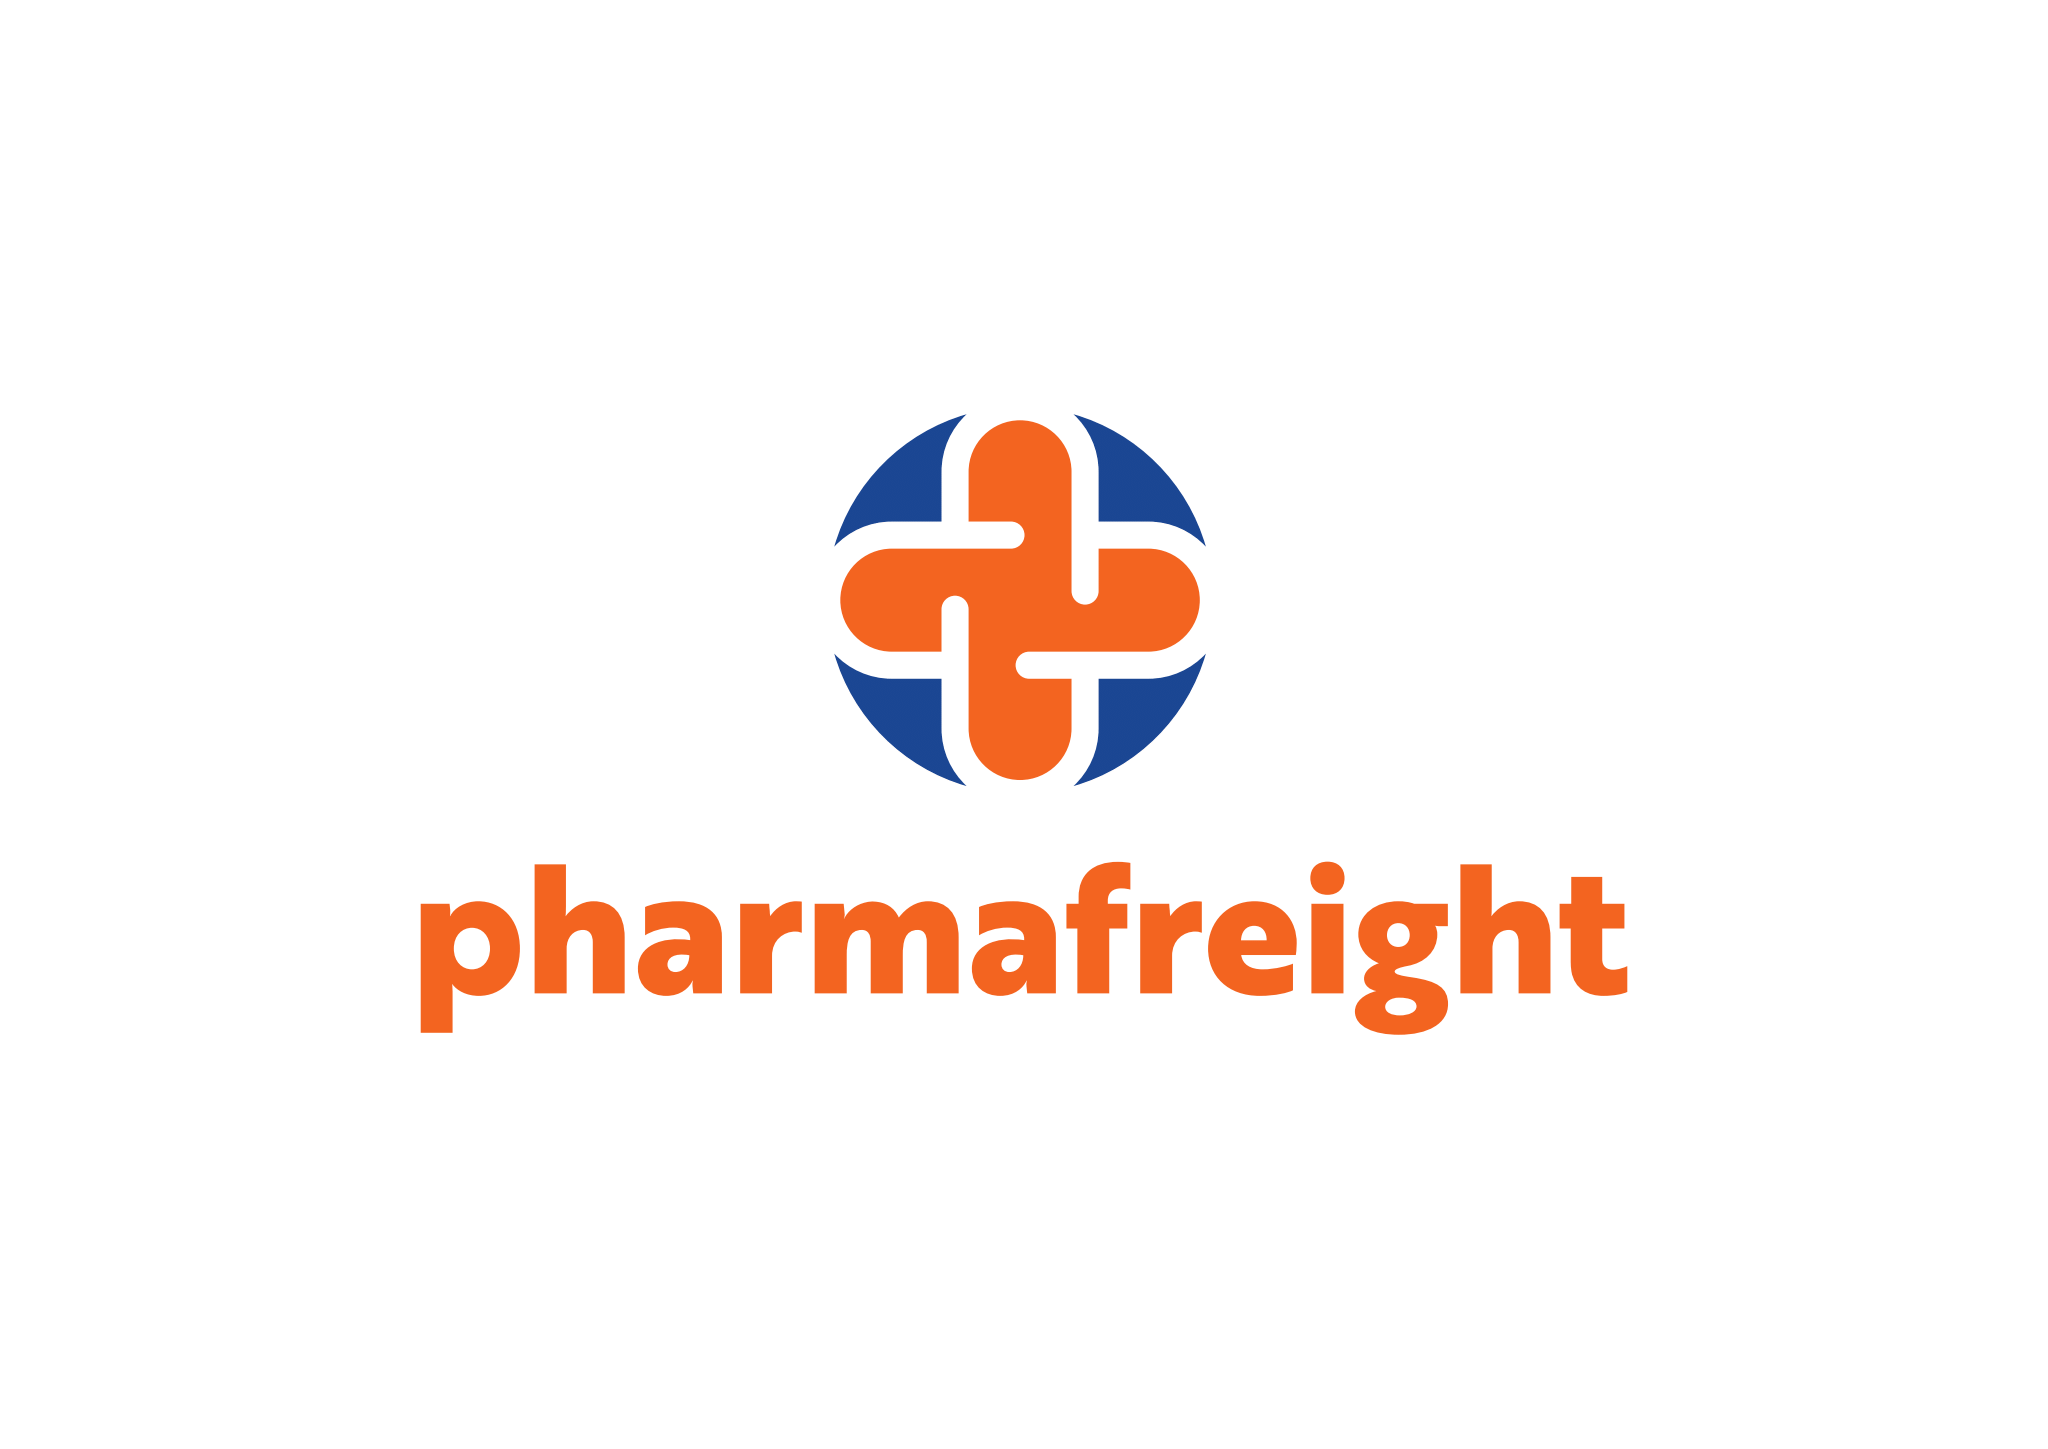 Pharmafreight Ltd